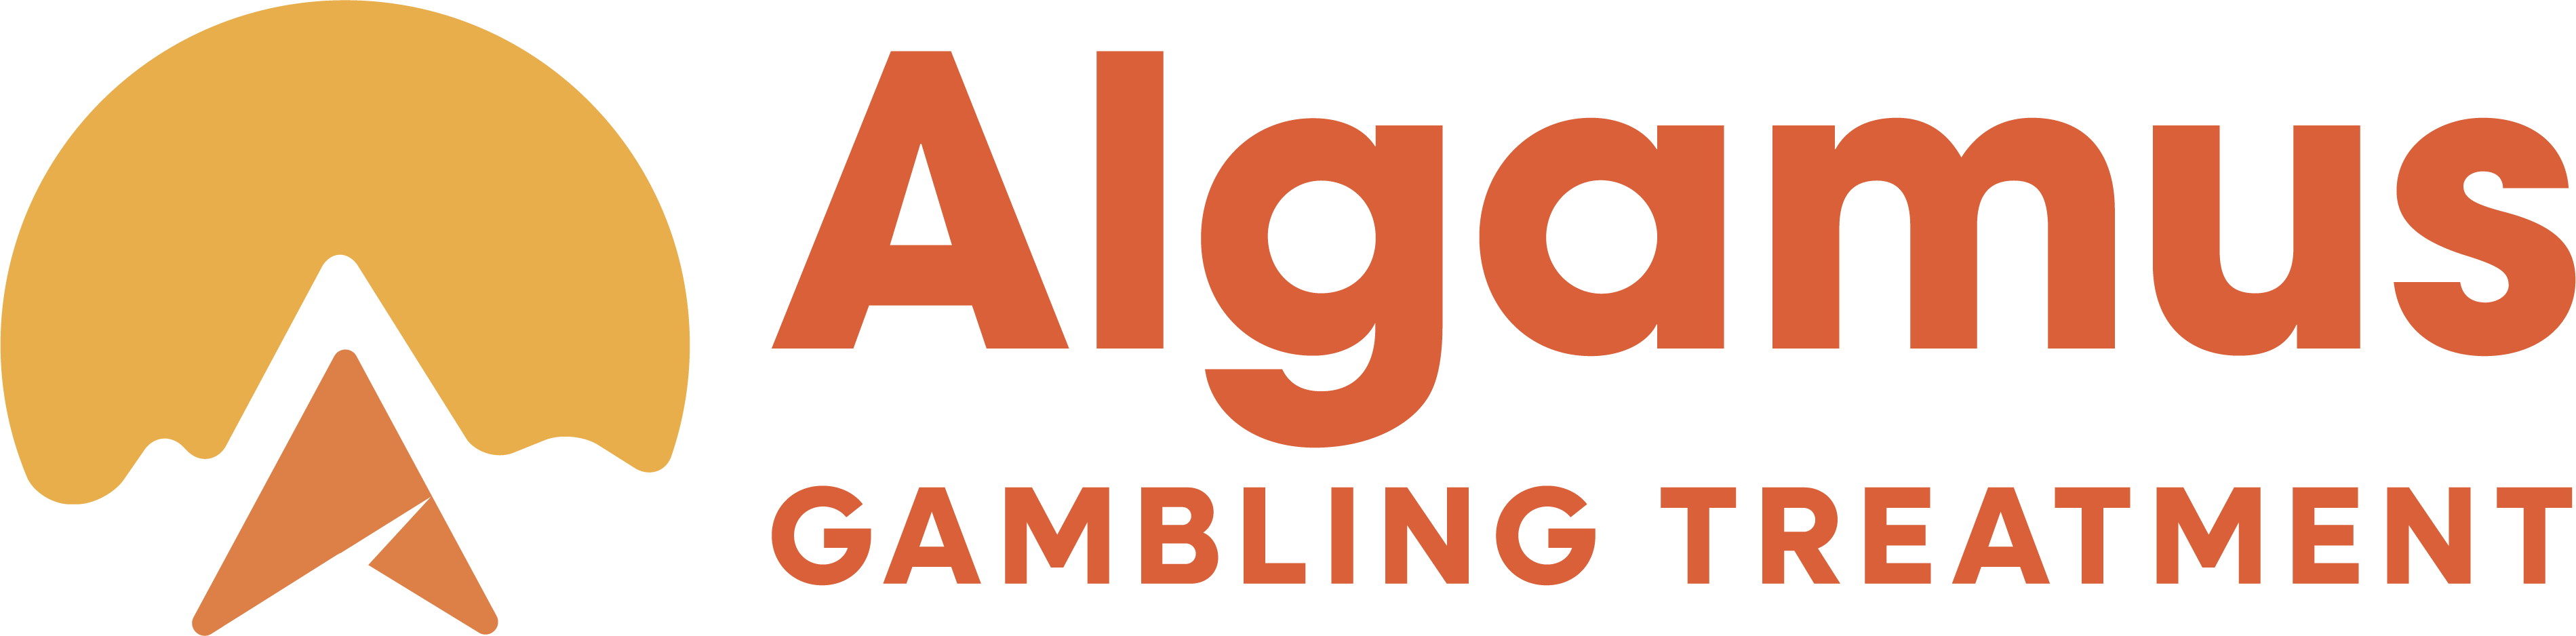 Algamus Gambling Treatment Services